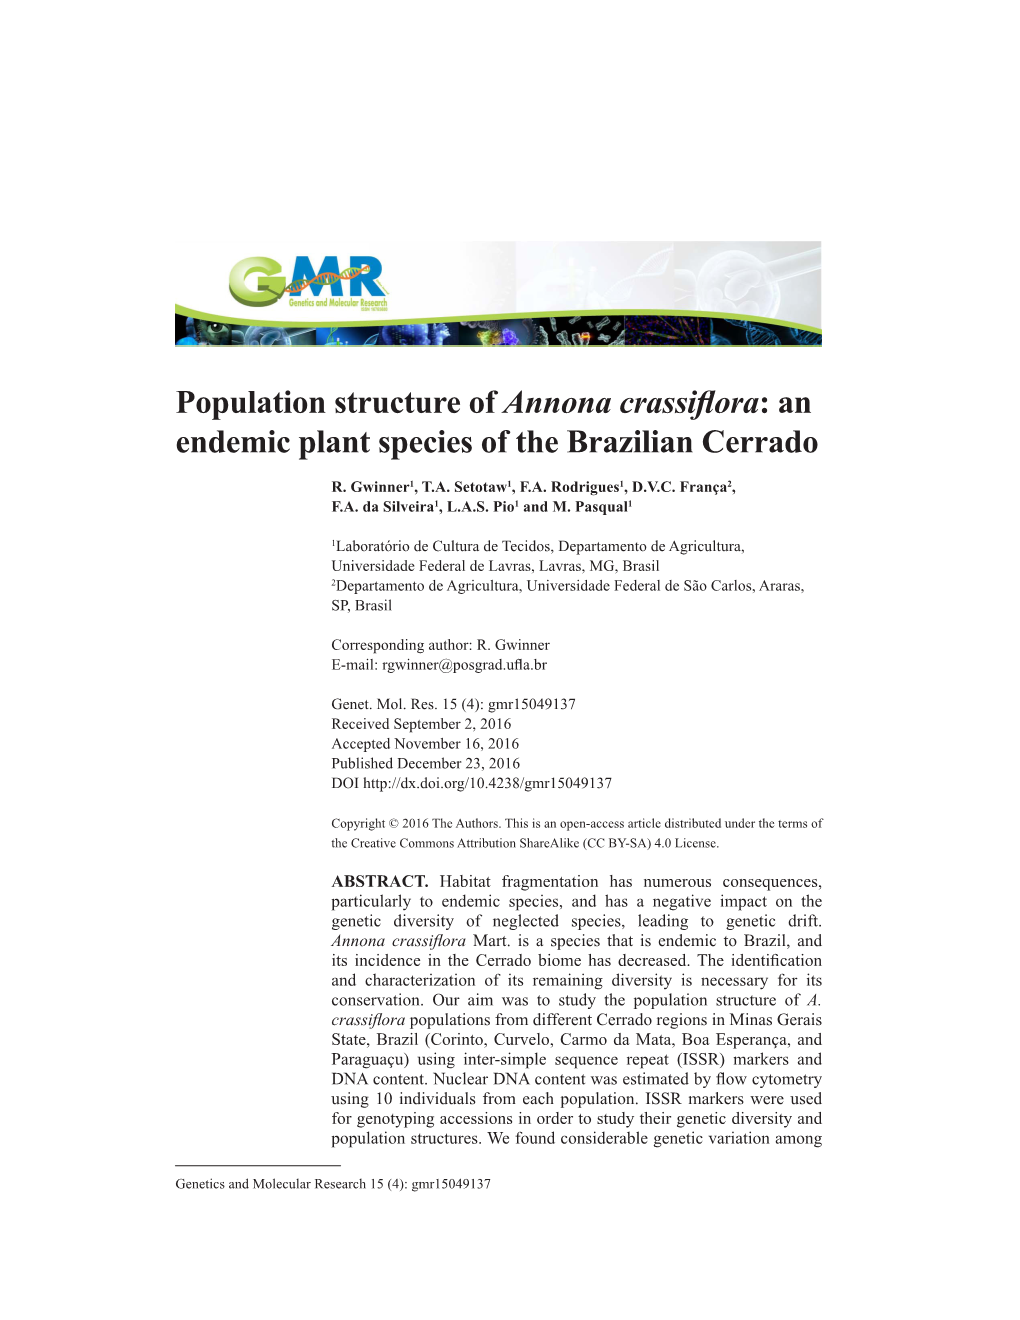 Population Structure of Annona Crassiflora: an Endemic Plant Species of the Brazilian Cerrado